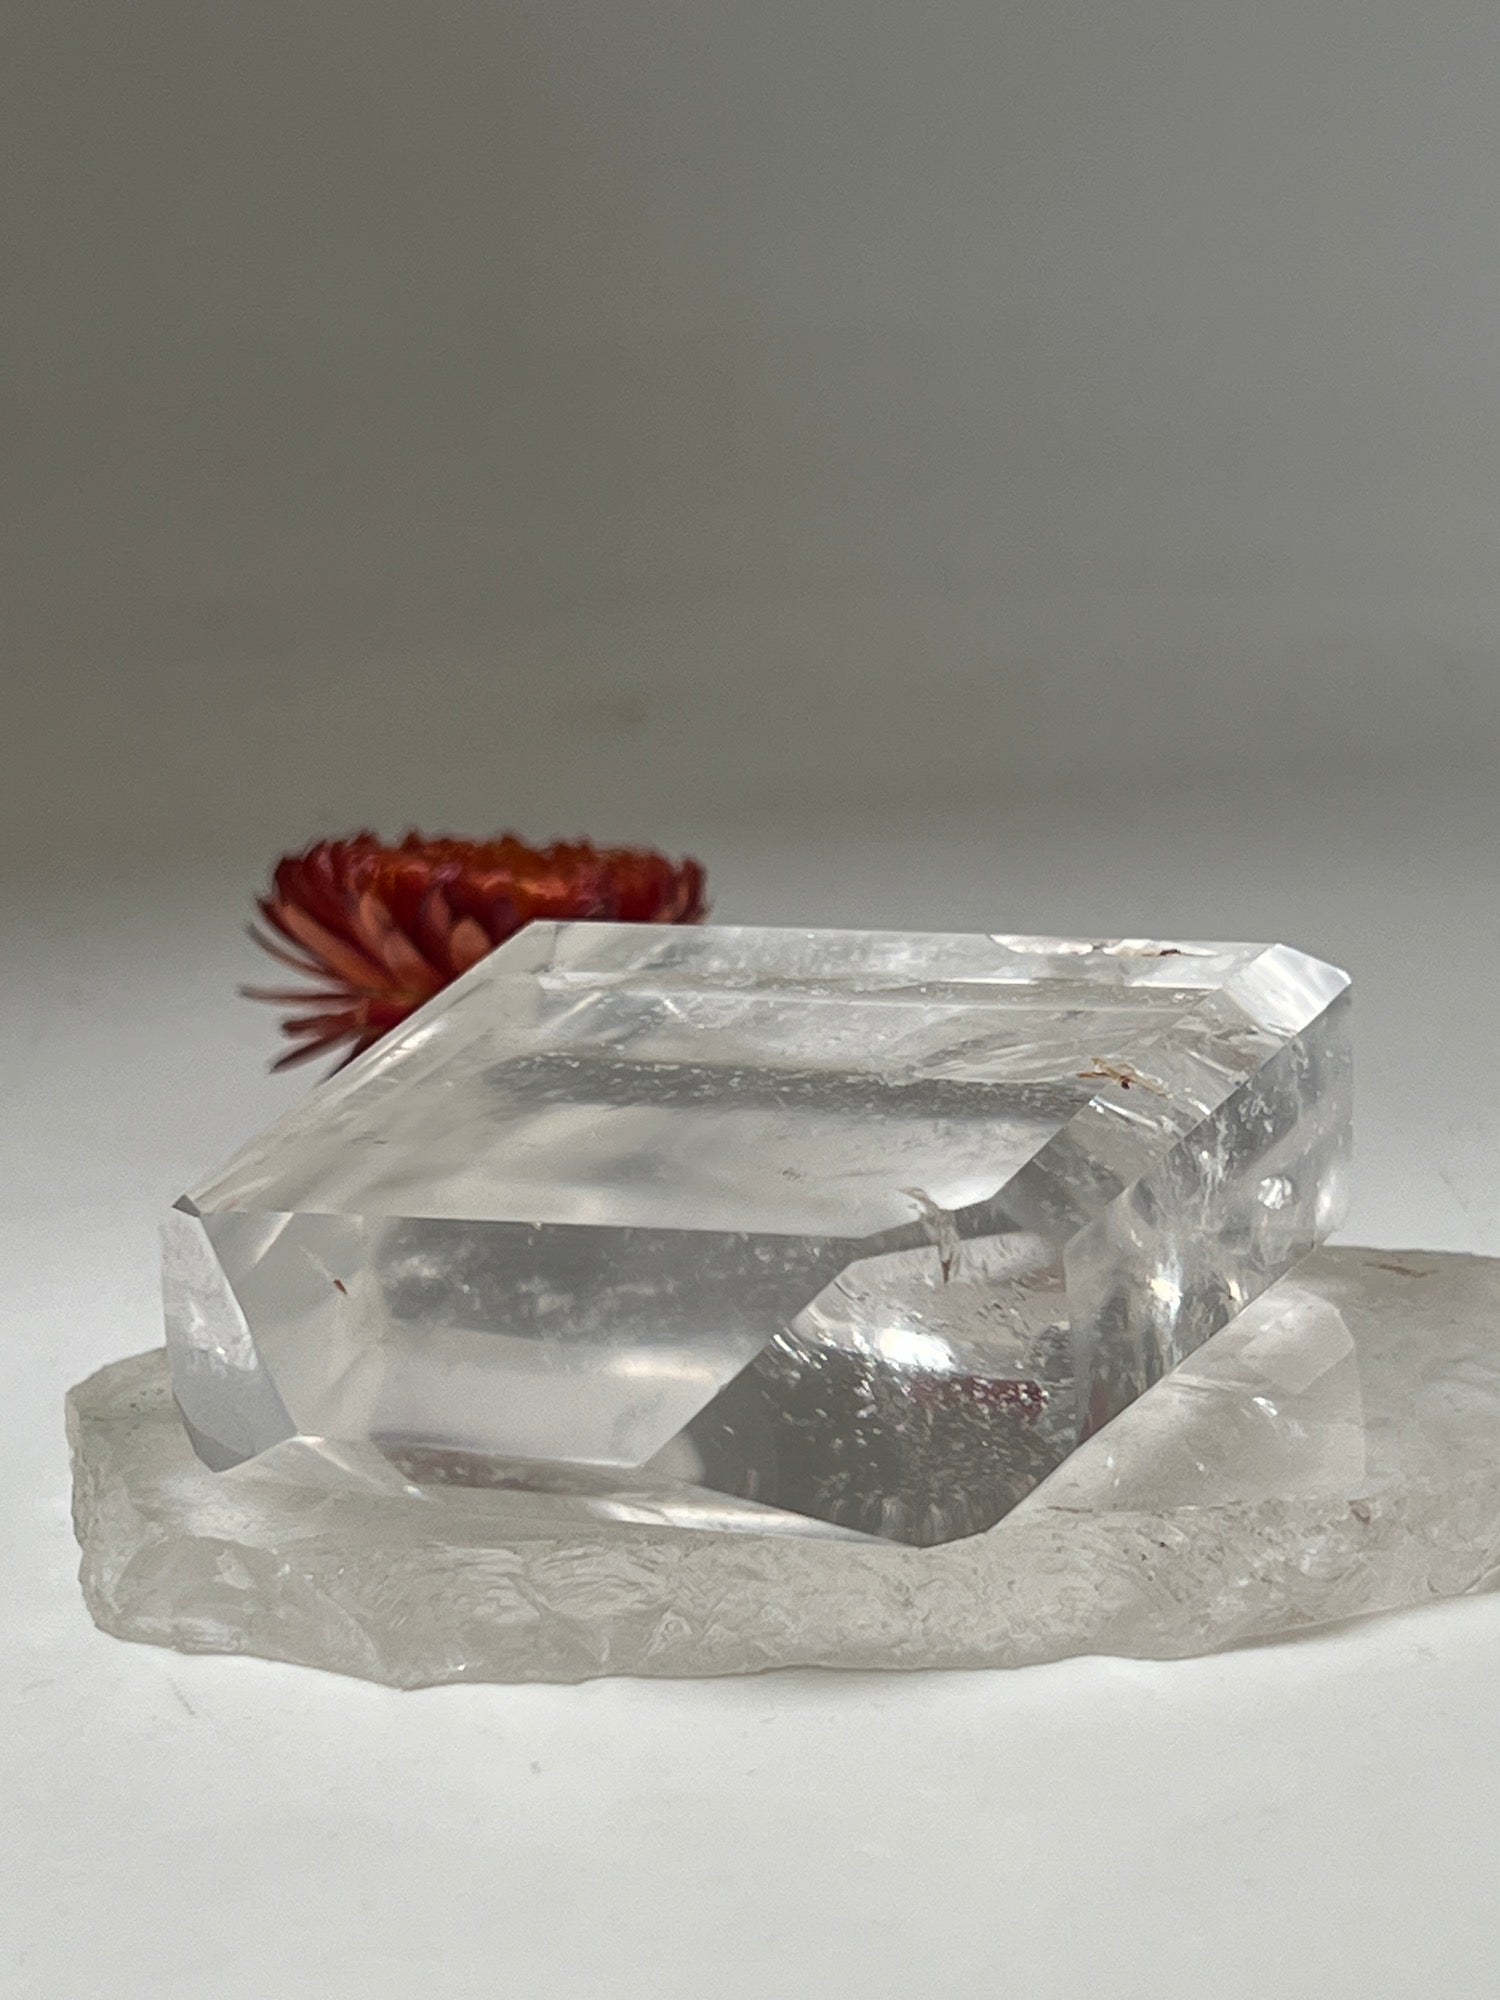 Unique Specimen Tabular Roc crystal from Madagascar